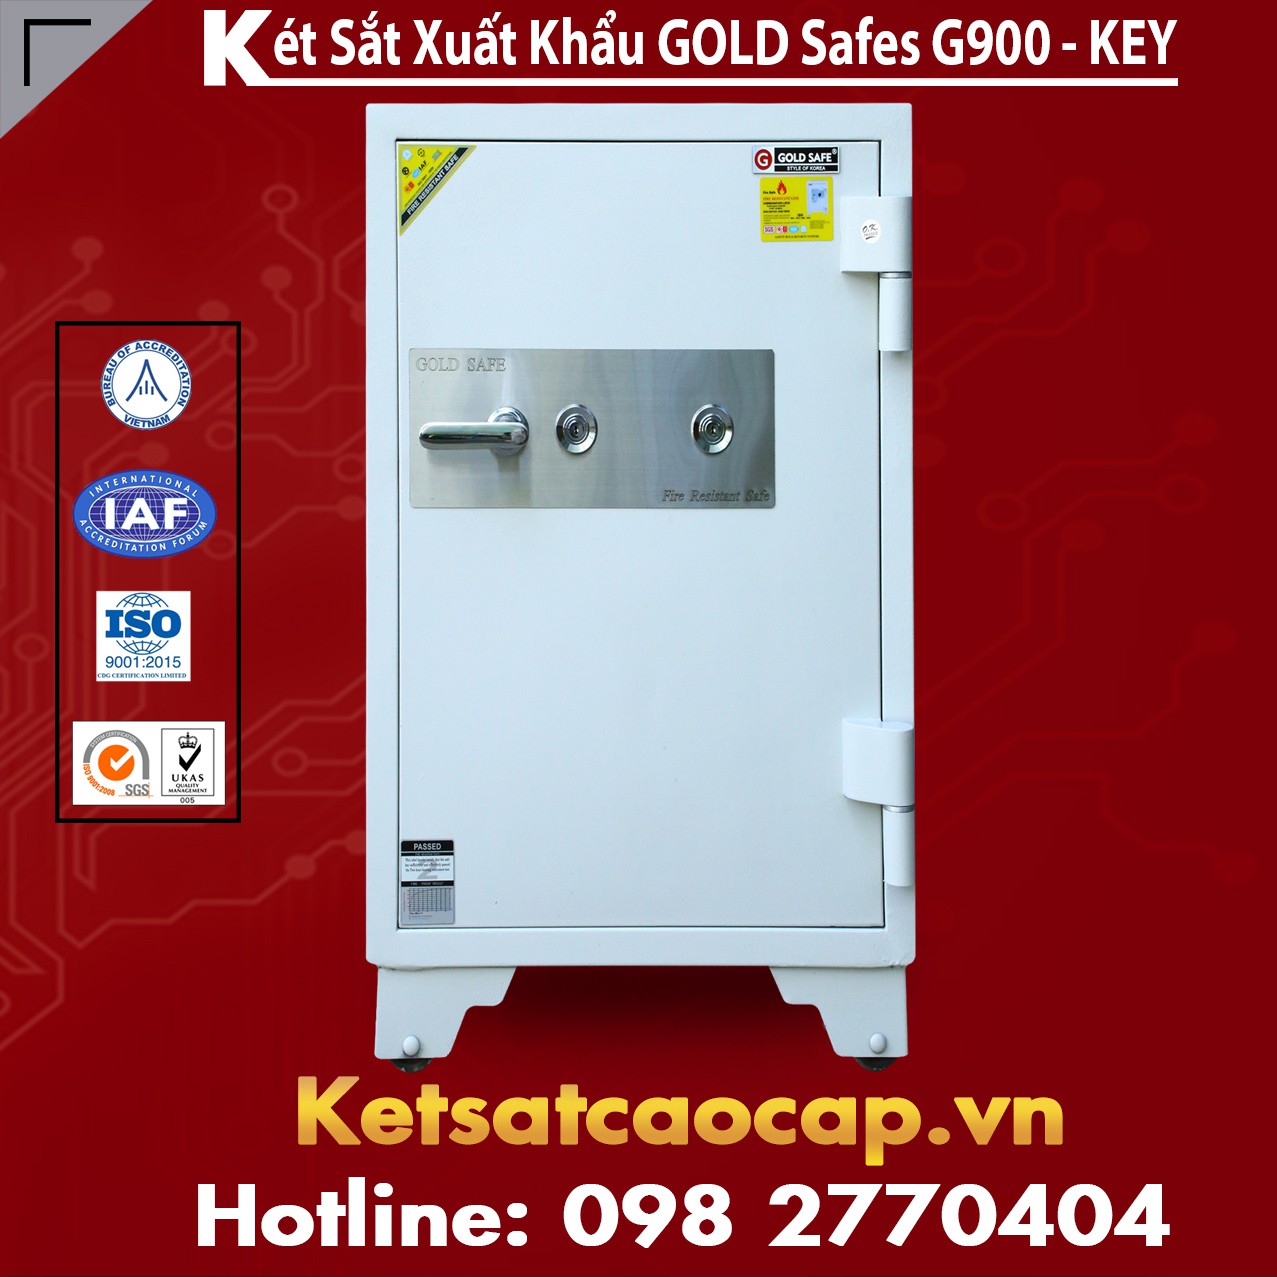 Két Sắt Đại Gia GOLD SAFES G900 KEY